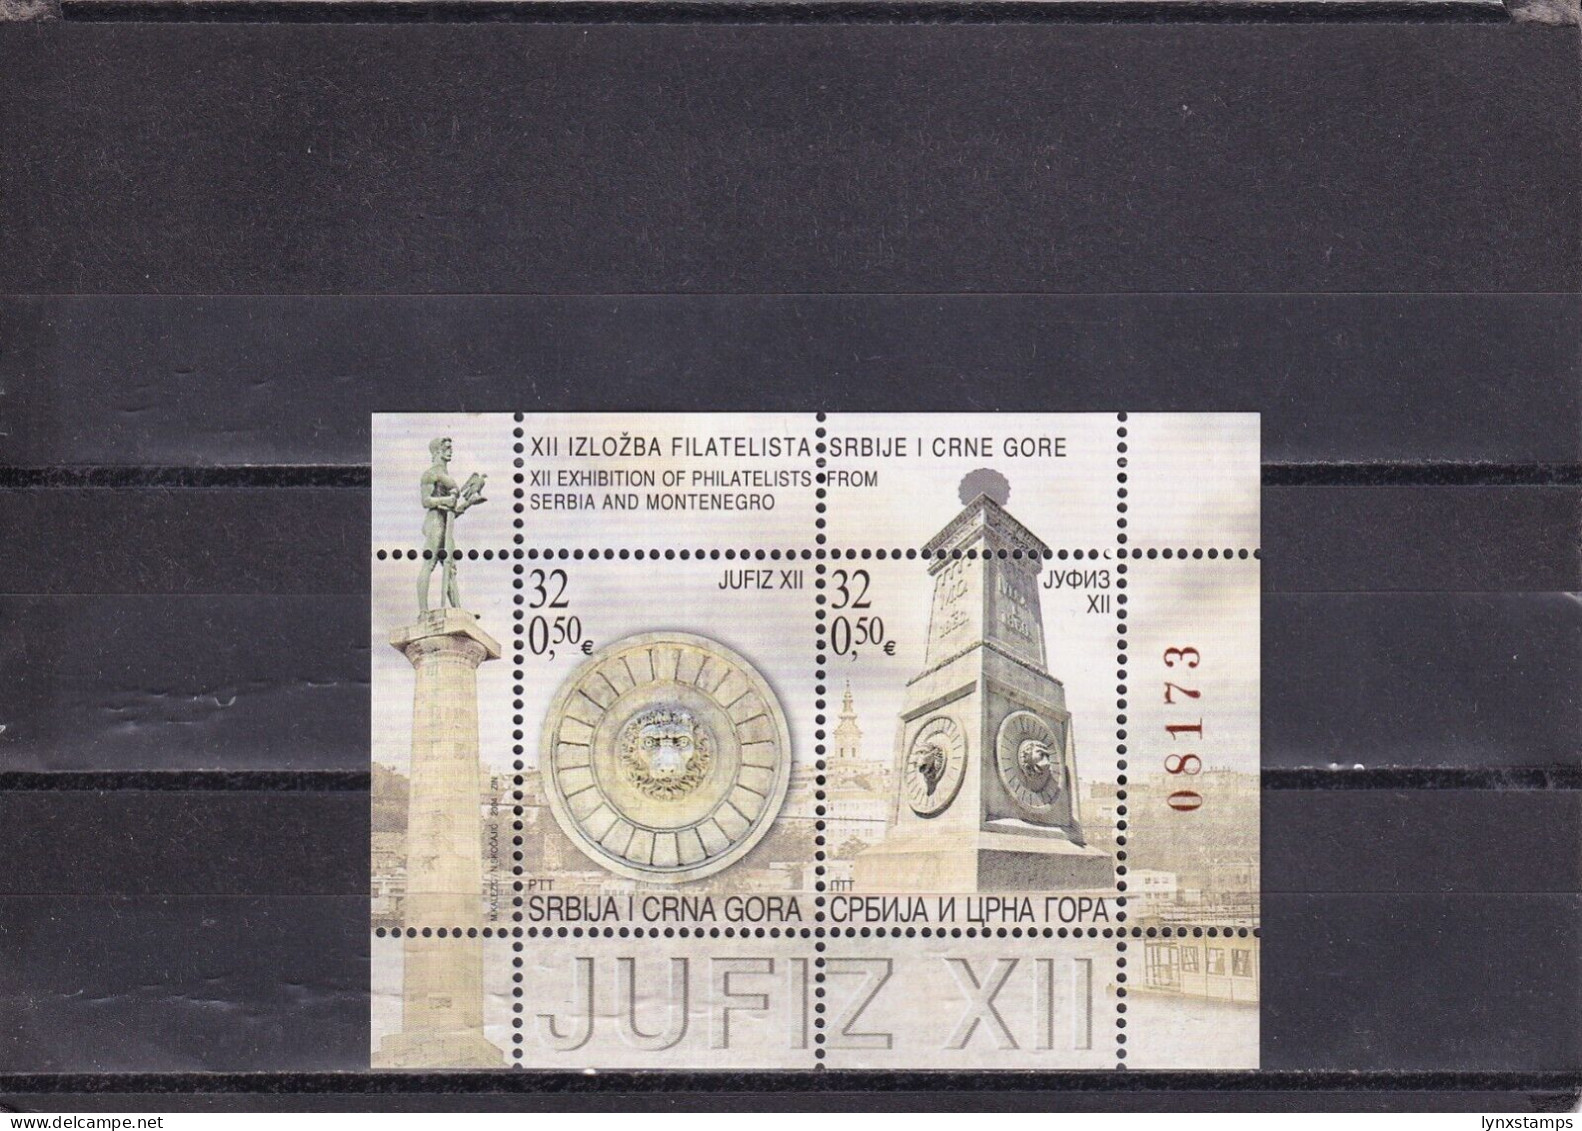 SA05 Serbia And Montenegro 2004 Stamp Exhibition JUFIZ XII Minisheet - Serbien